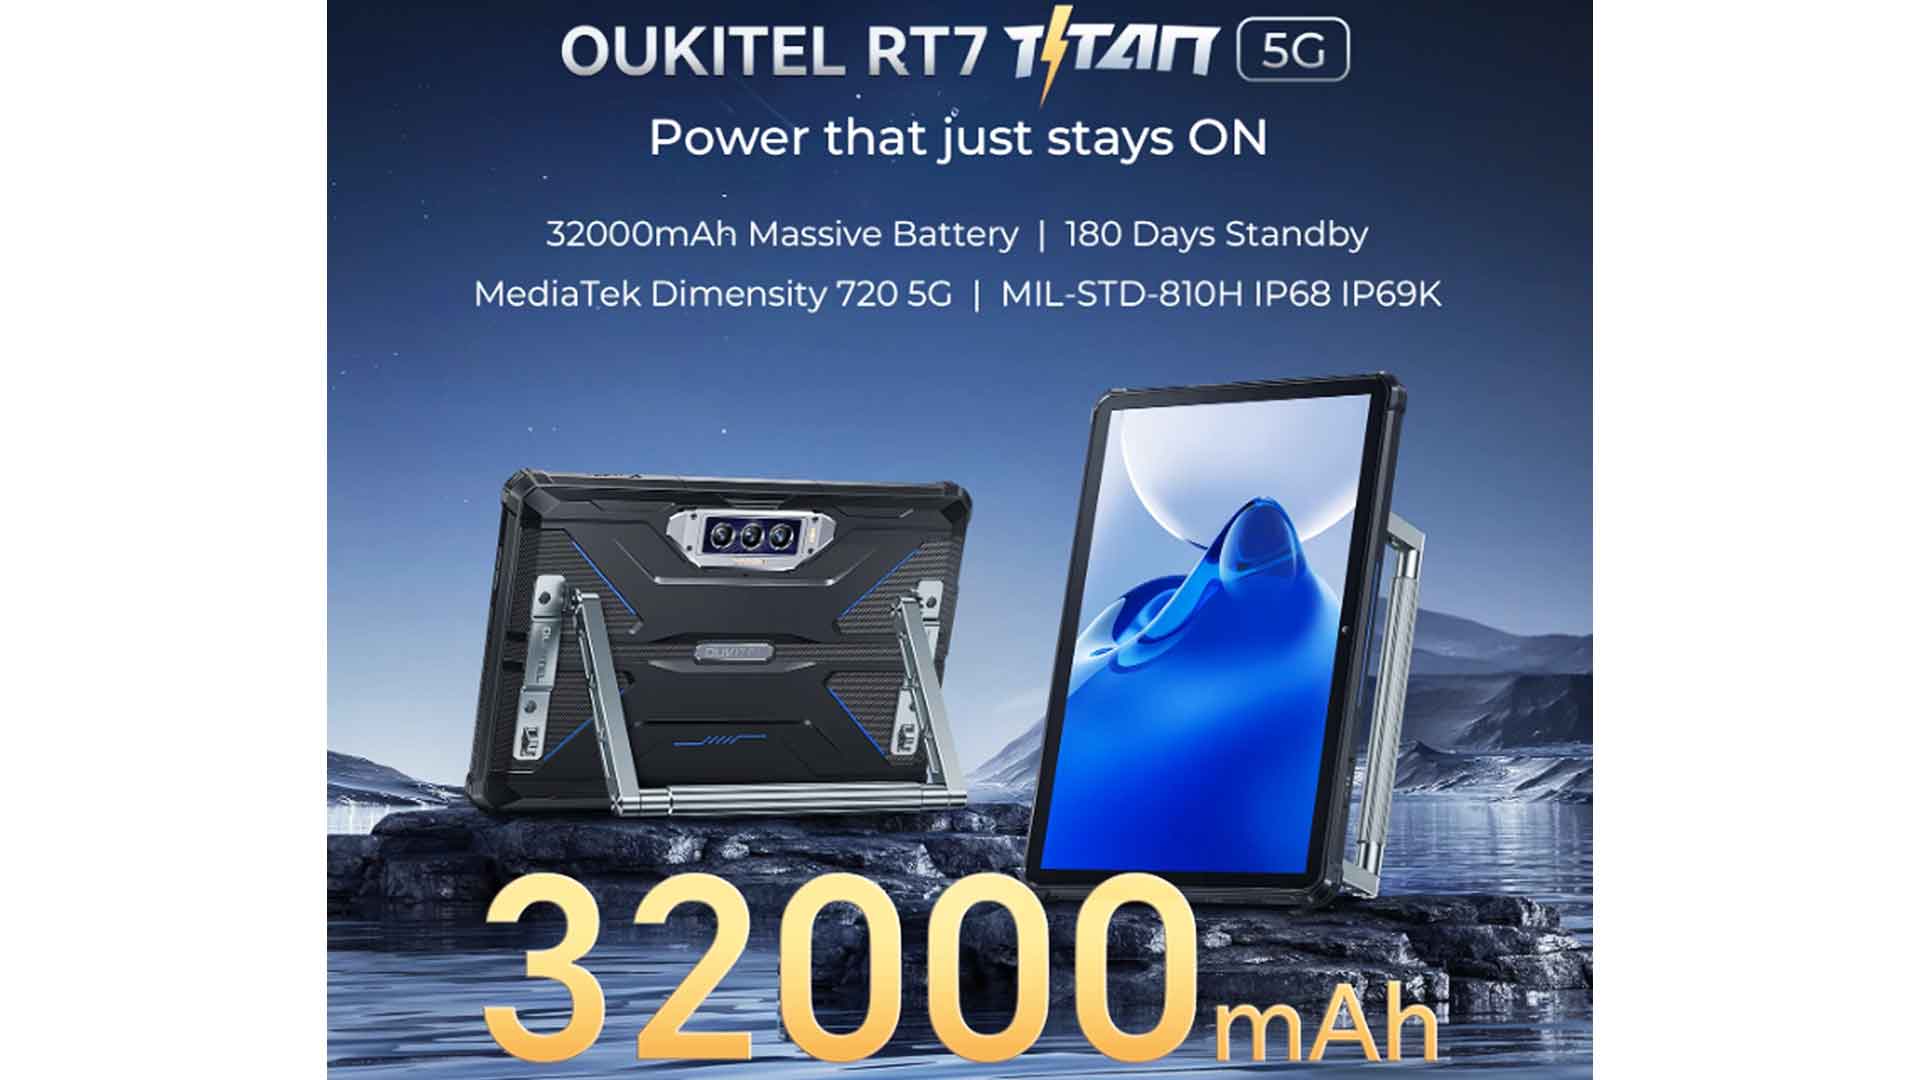 Oukitel RT7 Titan 5G Review